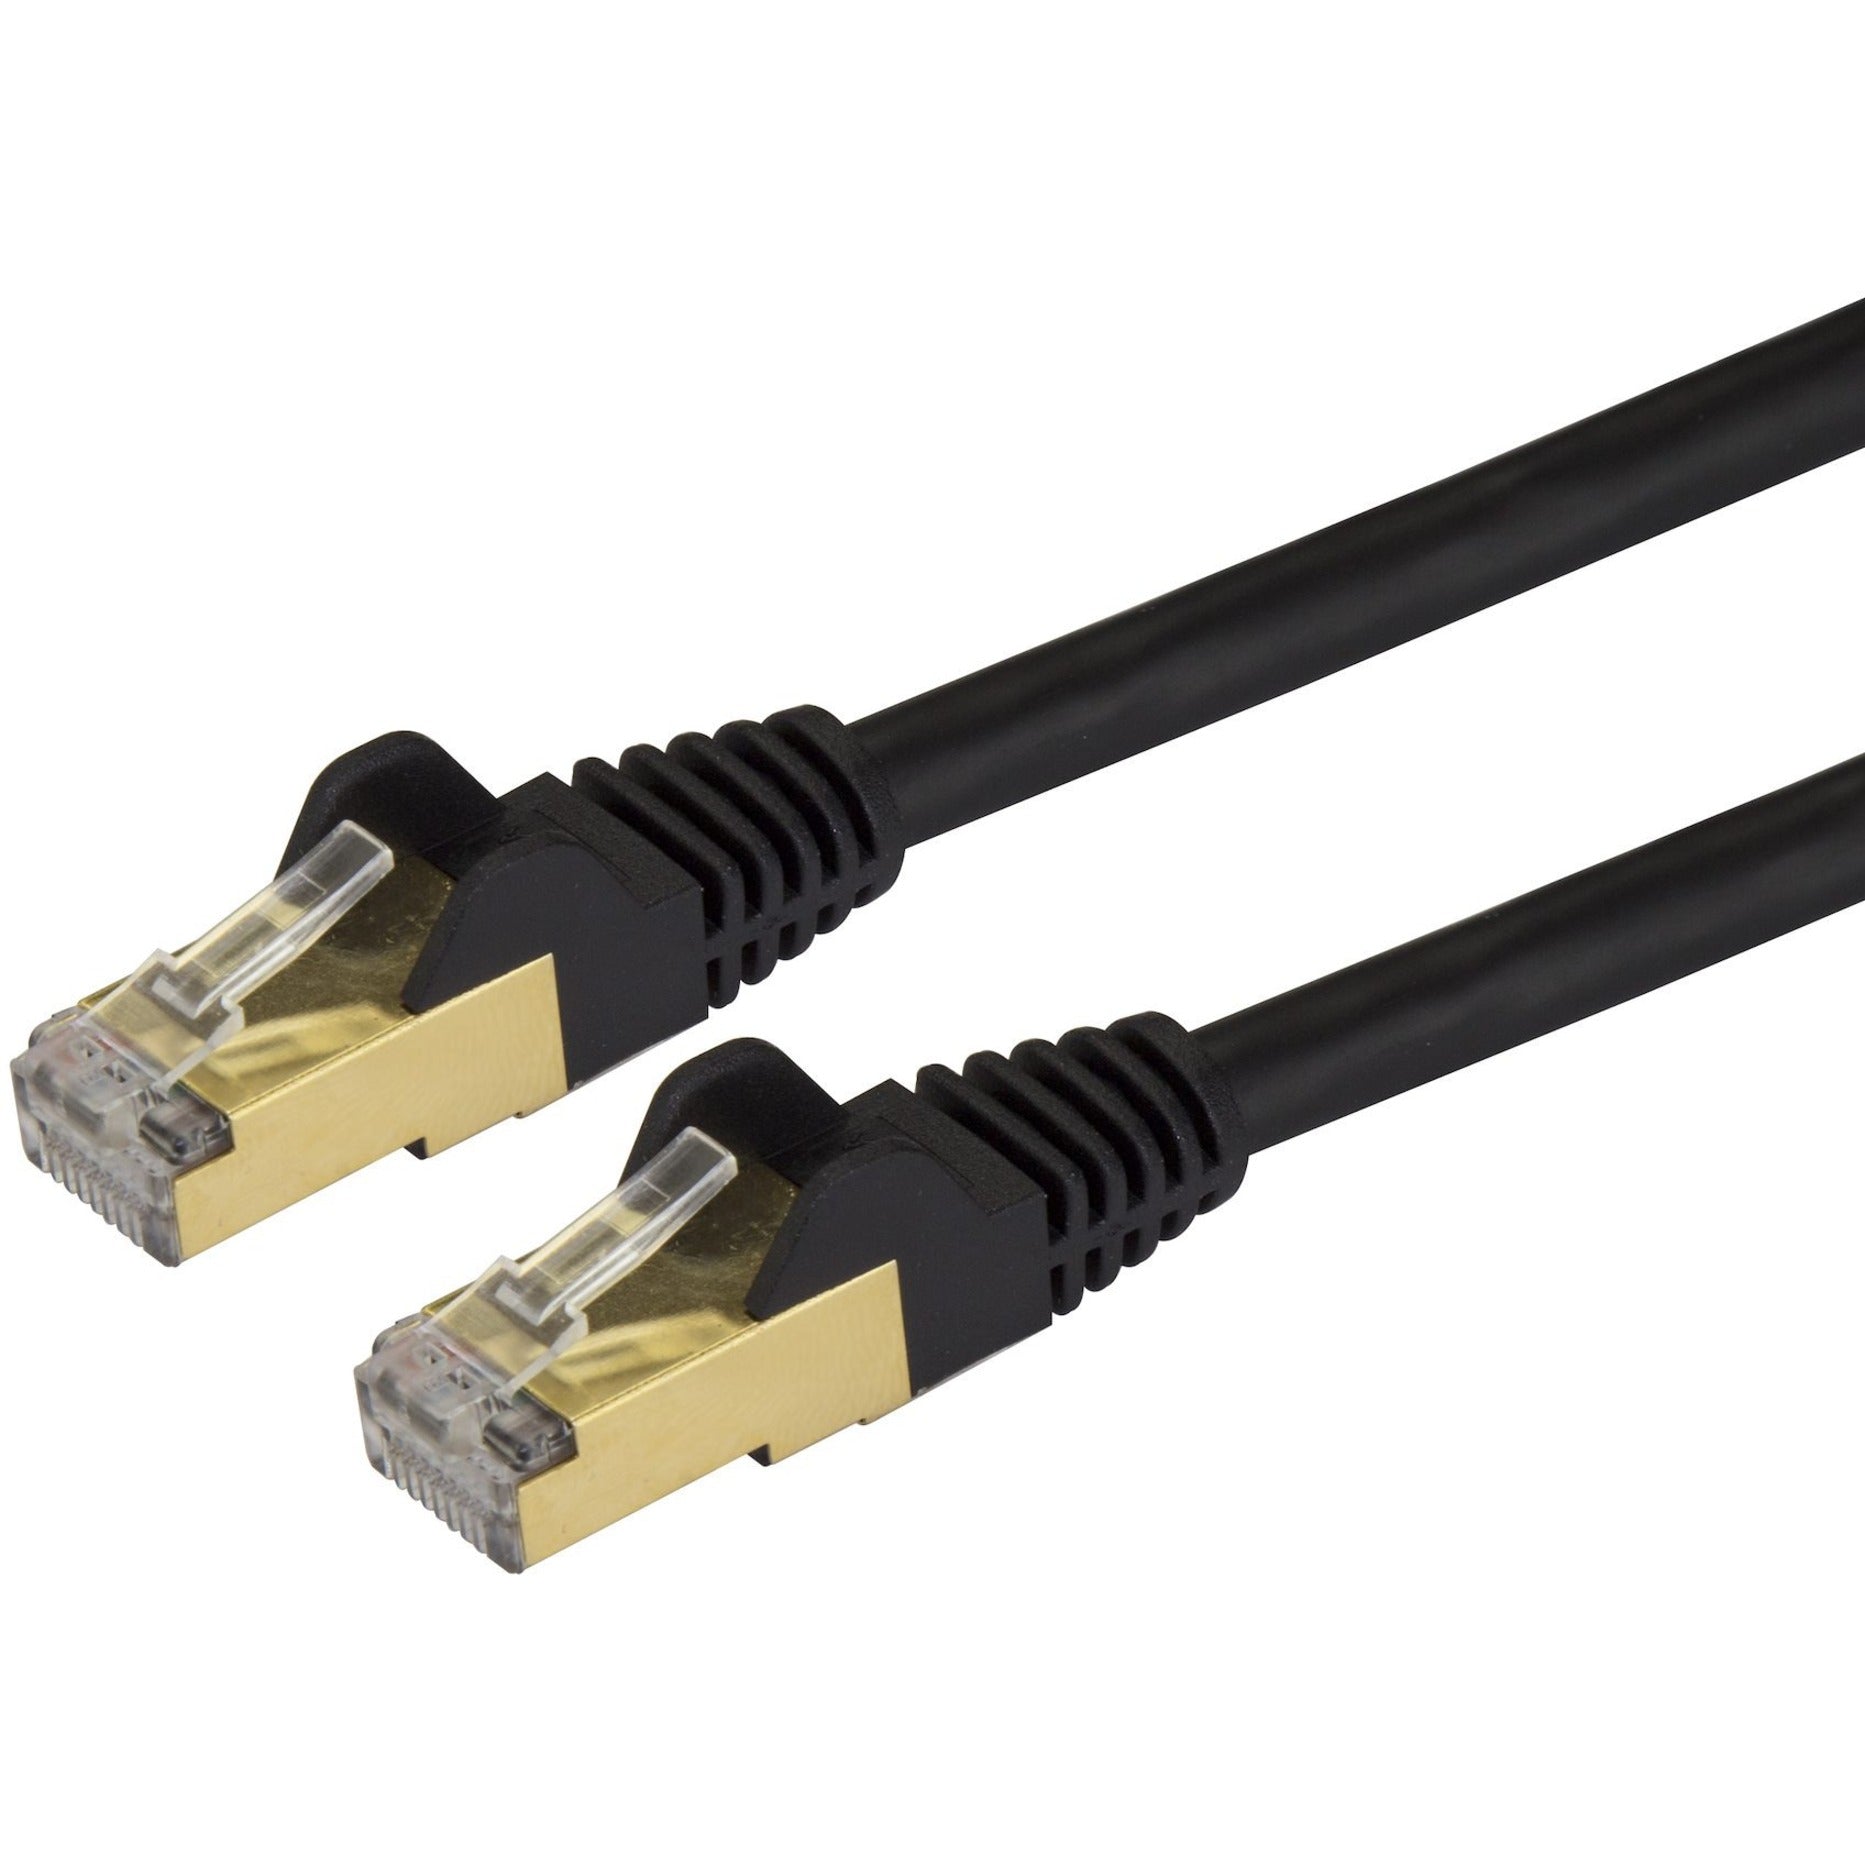 StarTech.com C6ASPAT5BK Cat6a Ethernet Patch Cable - Shielded (STP) - 5 ft., Black, Snagless RJ45 Ethernet Cord